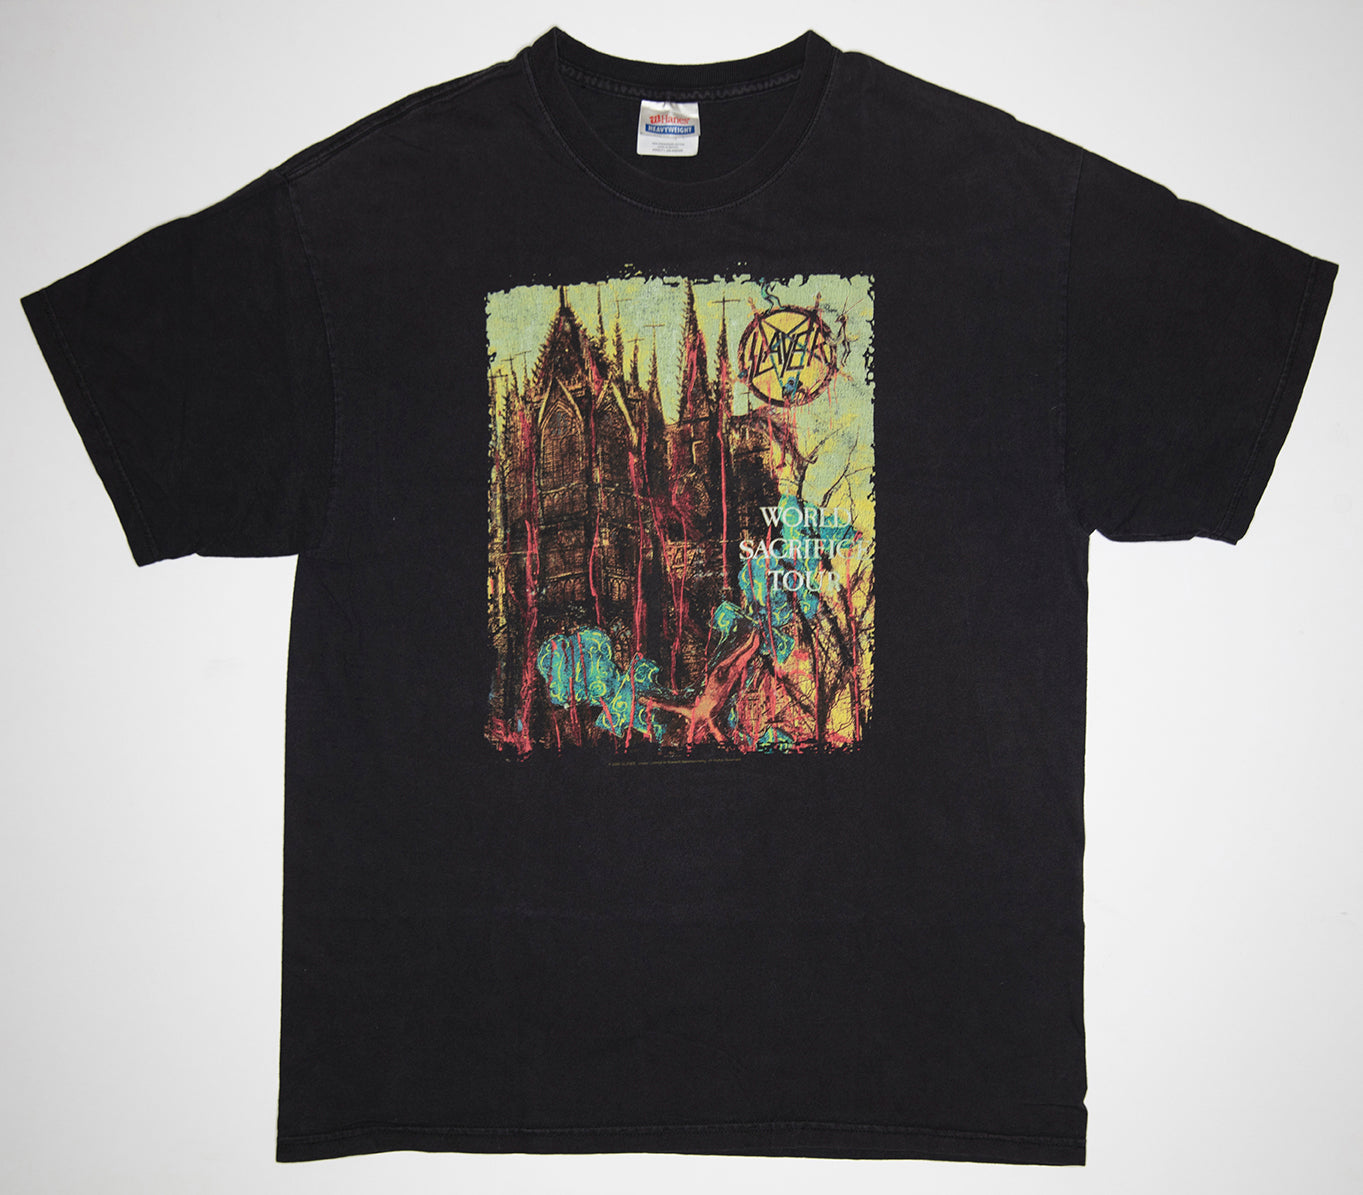 Slayer - World Sacrifice Tour Shirt Size Large (2006 Reprint)